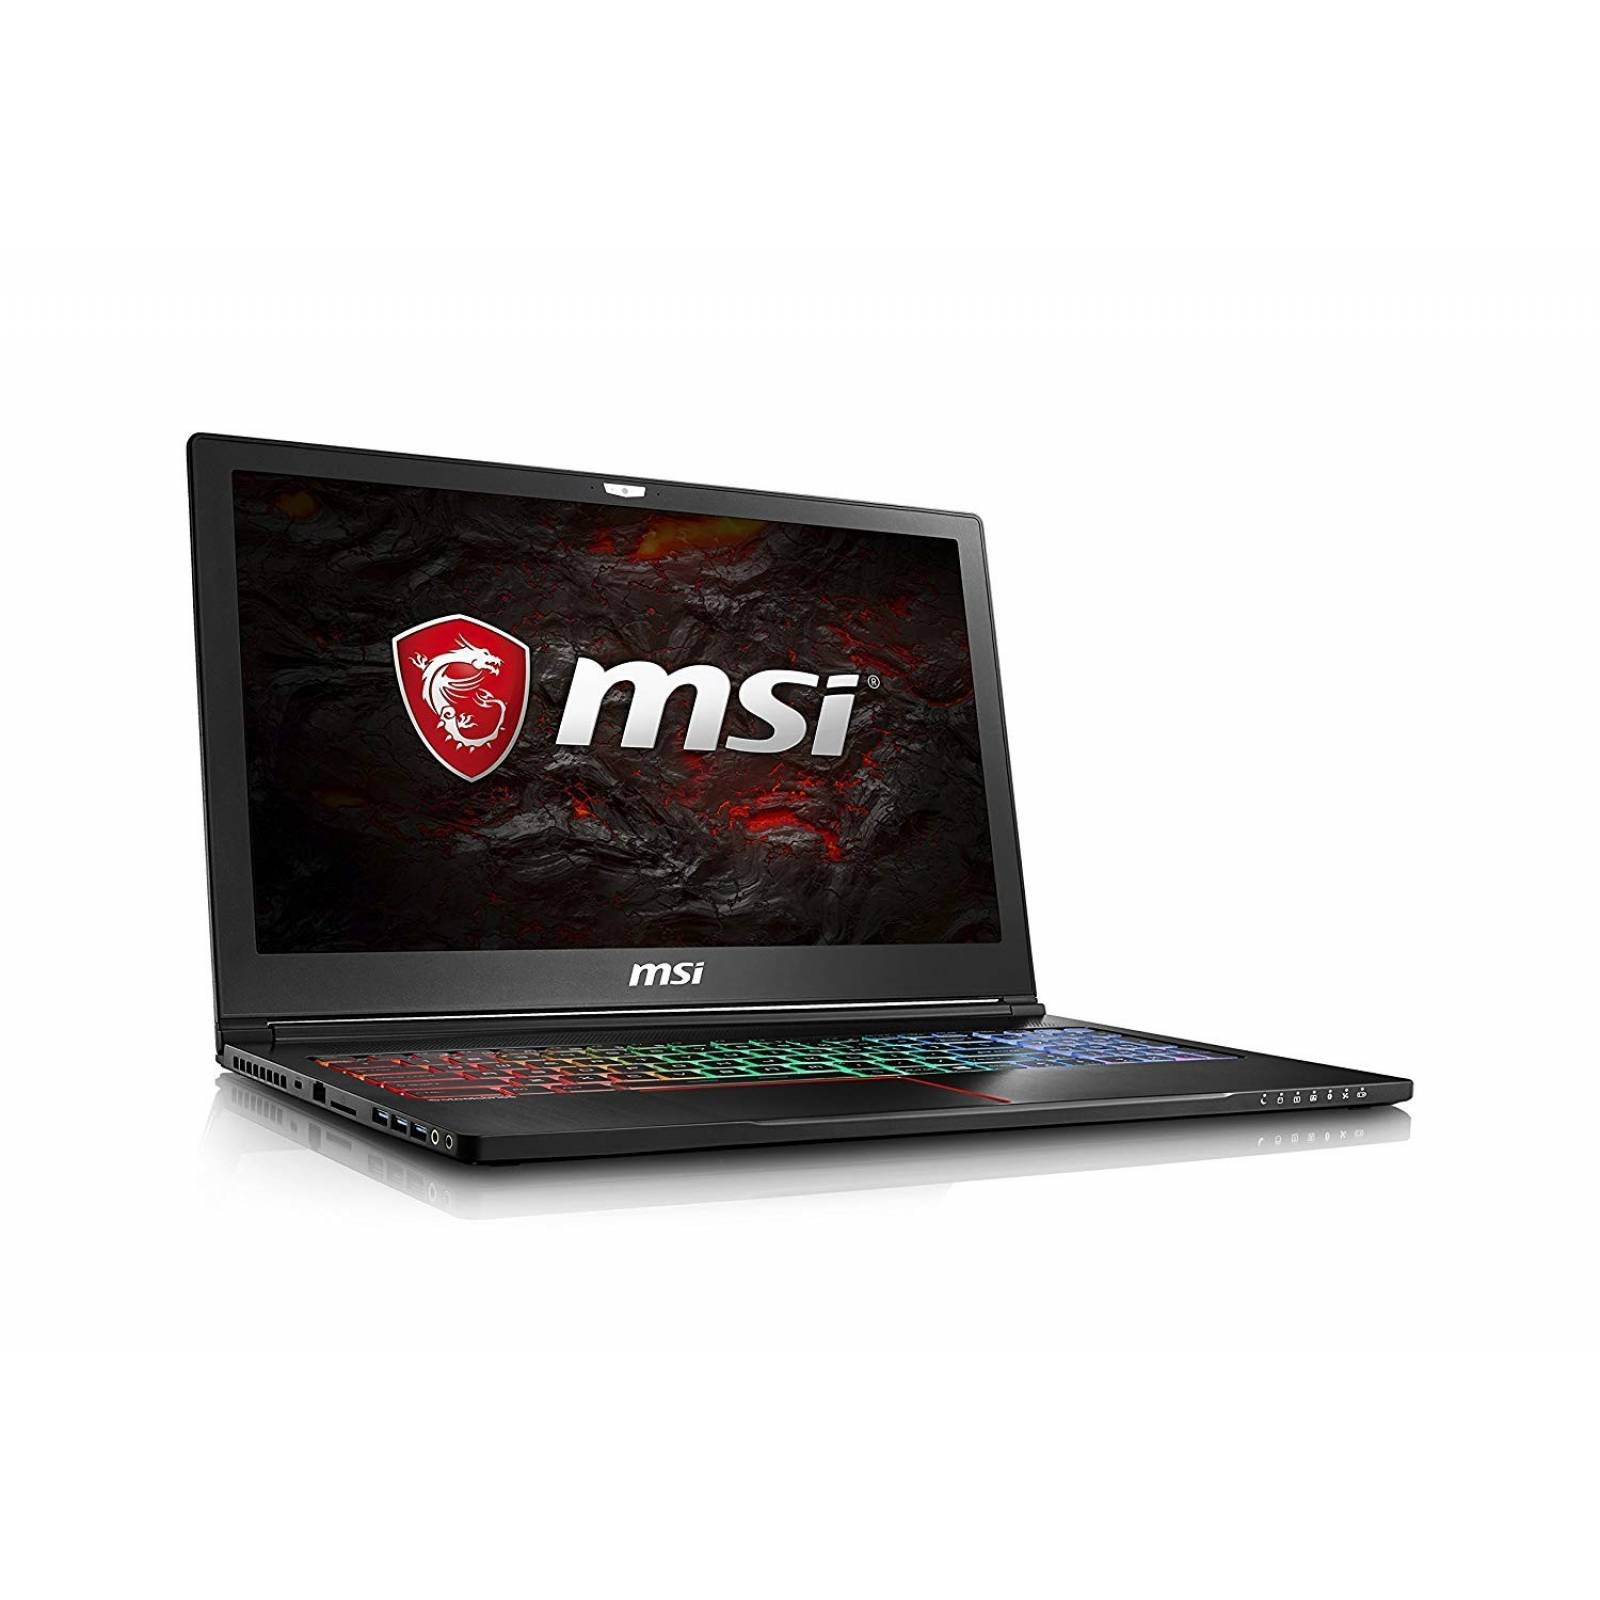 Laptop MSI GS63VR STEALTH PRO-230 i7 16GB 256GB 2TB GTX1060